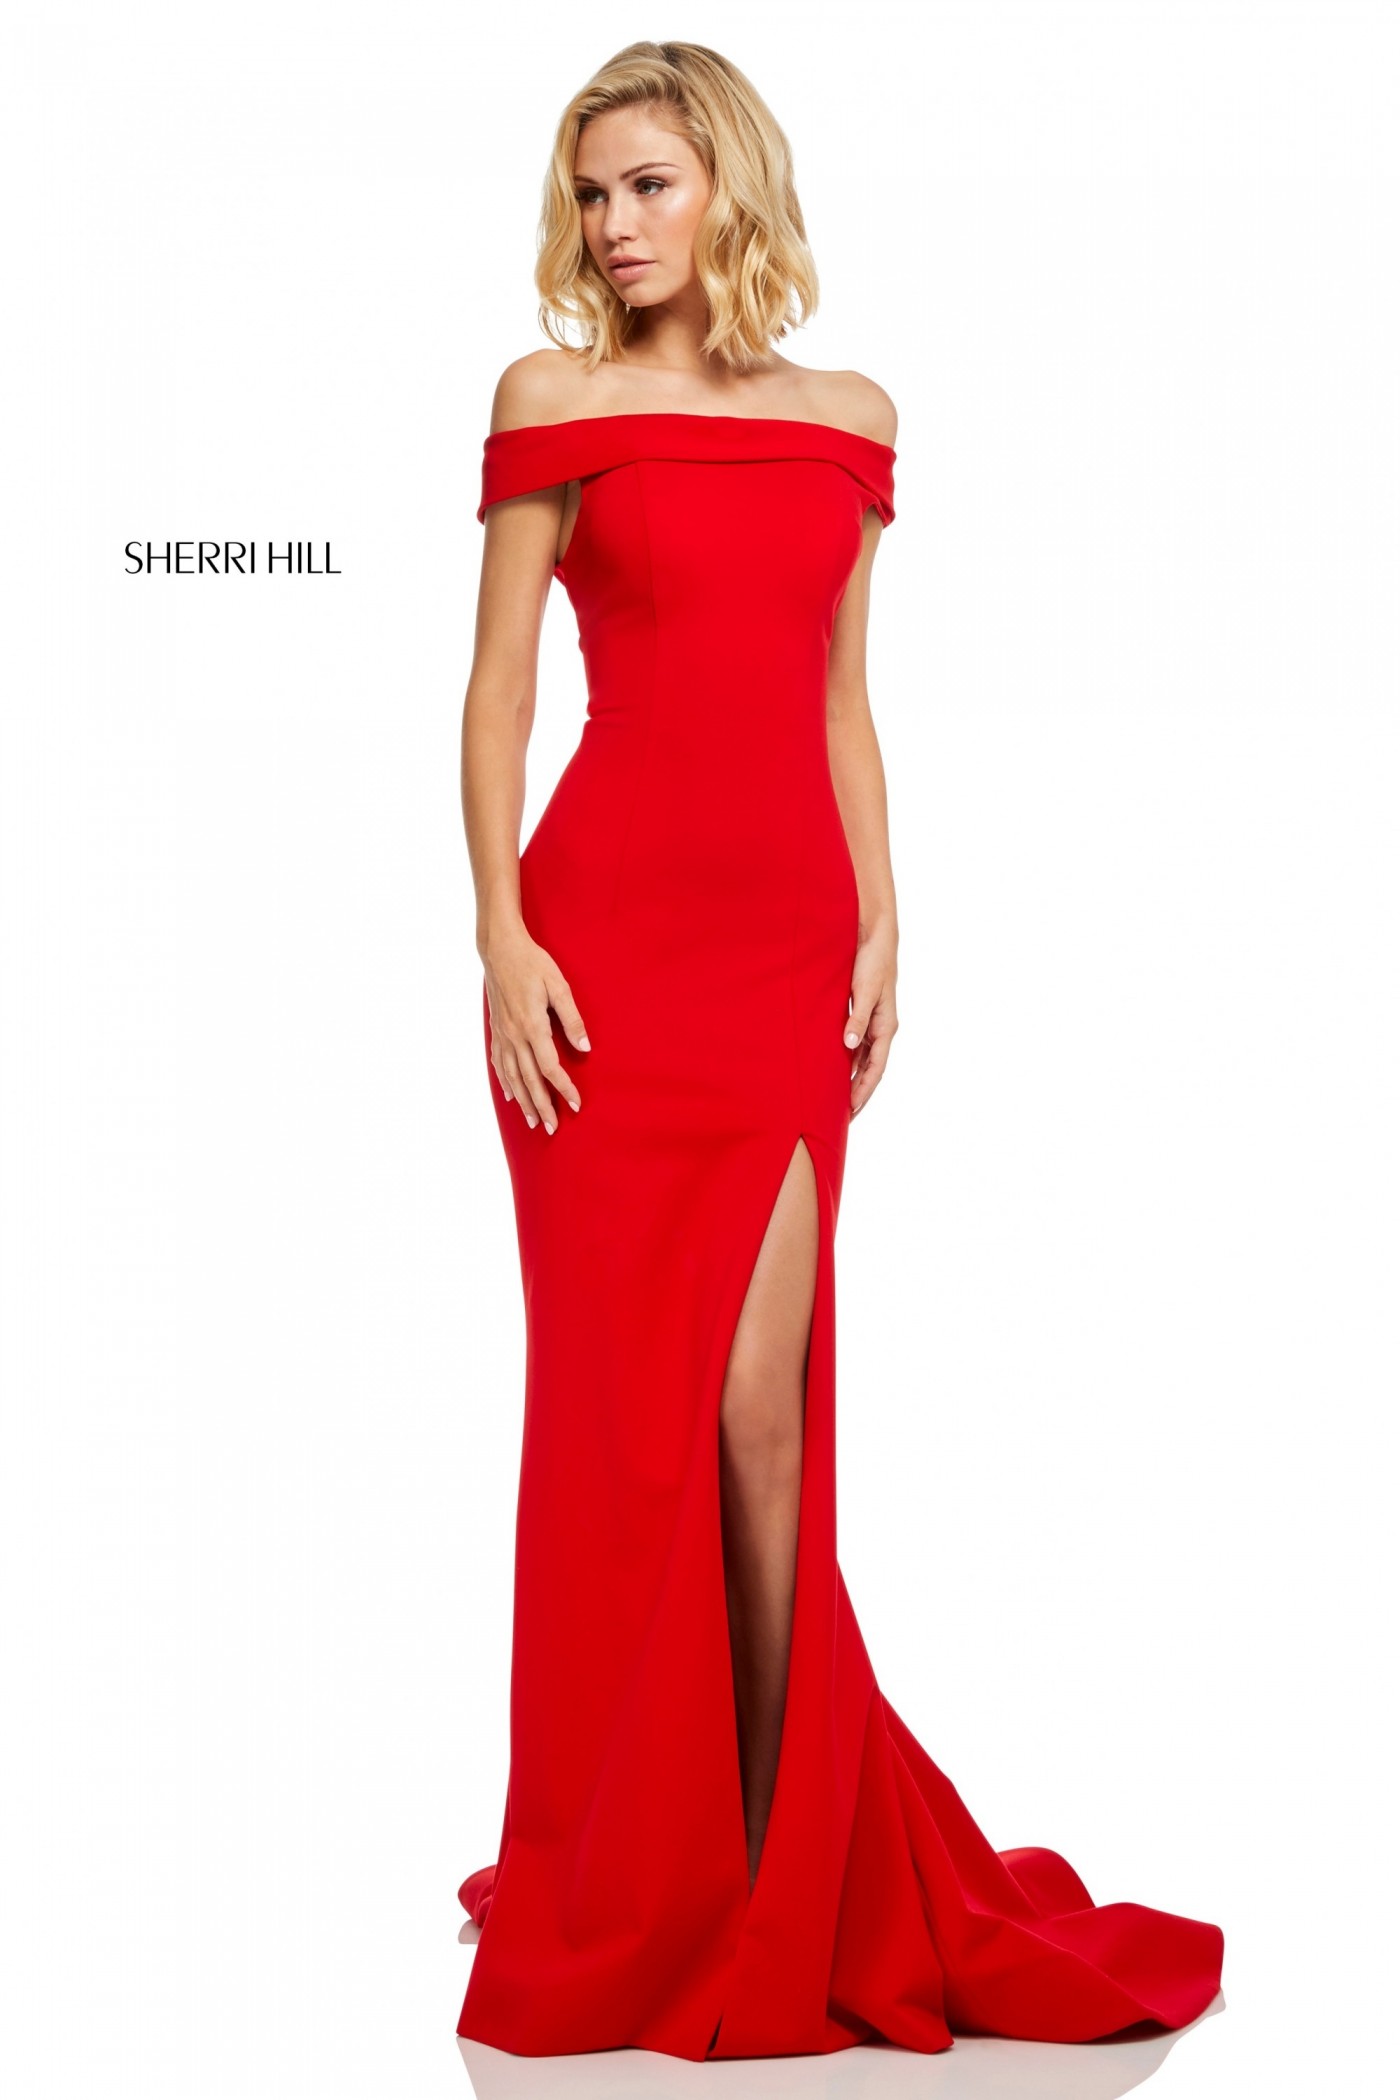 Sherri Hill 52607 Red Off The Shoulder Mermaid Dress